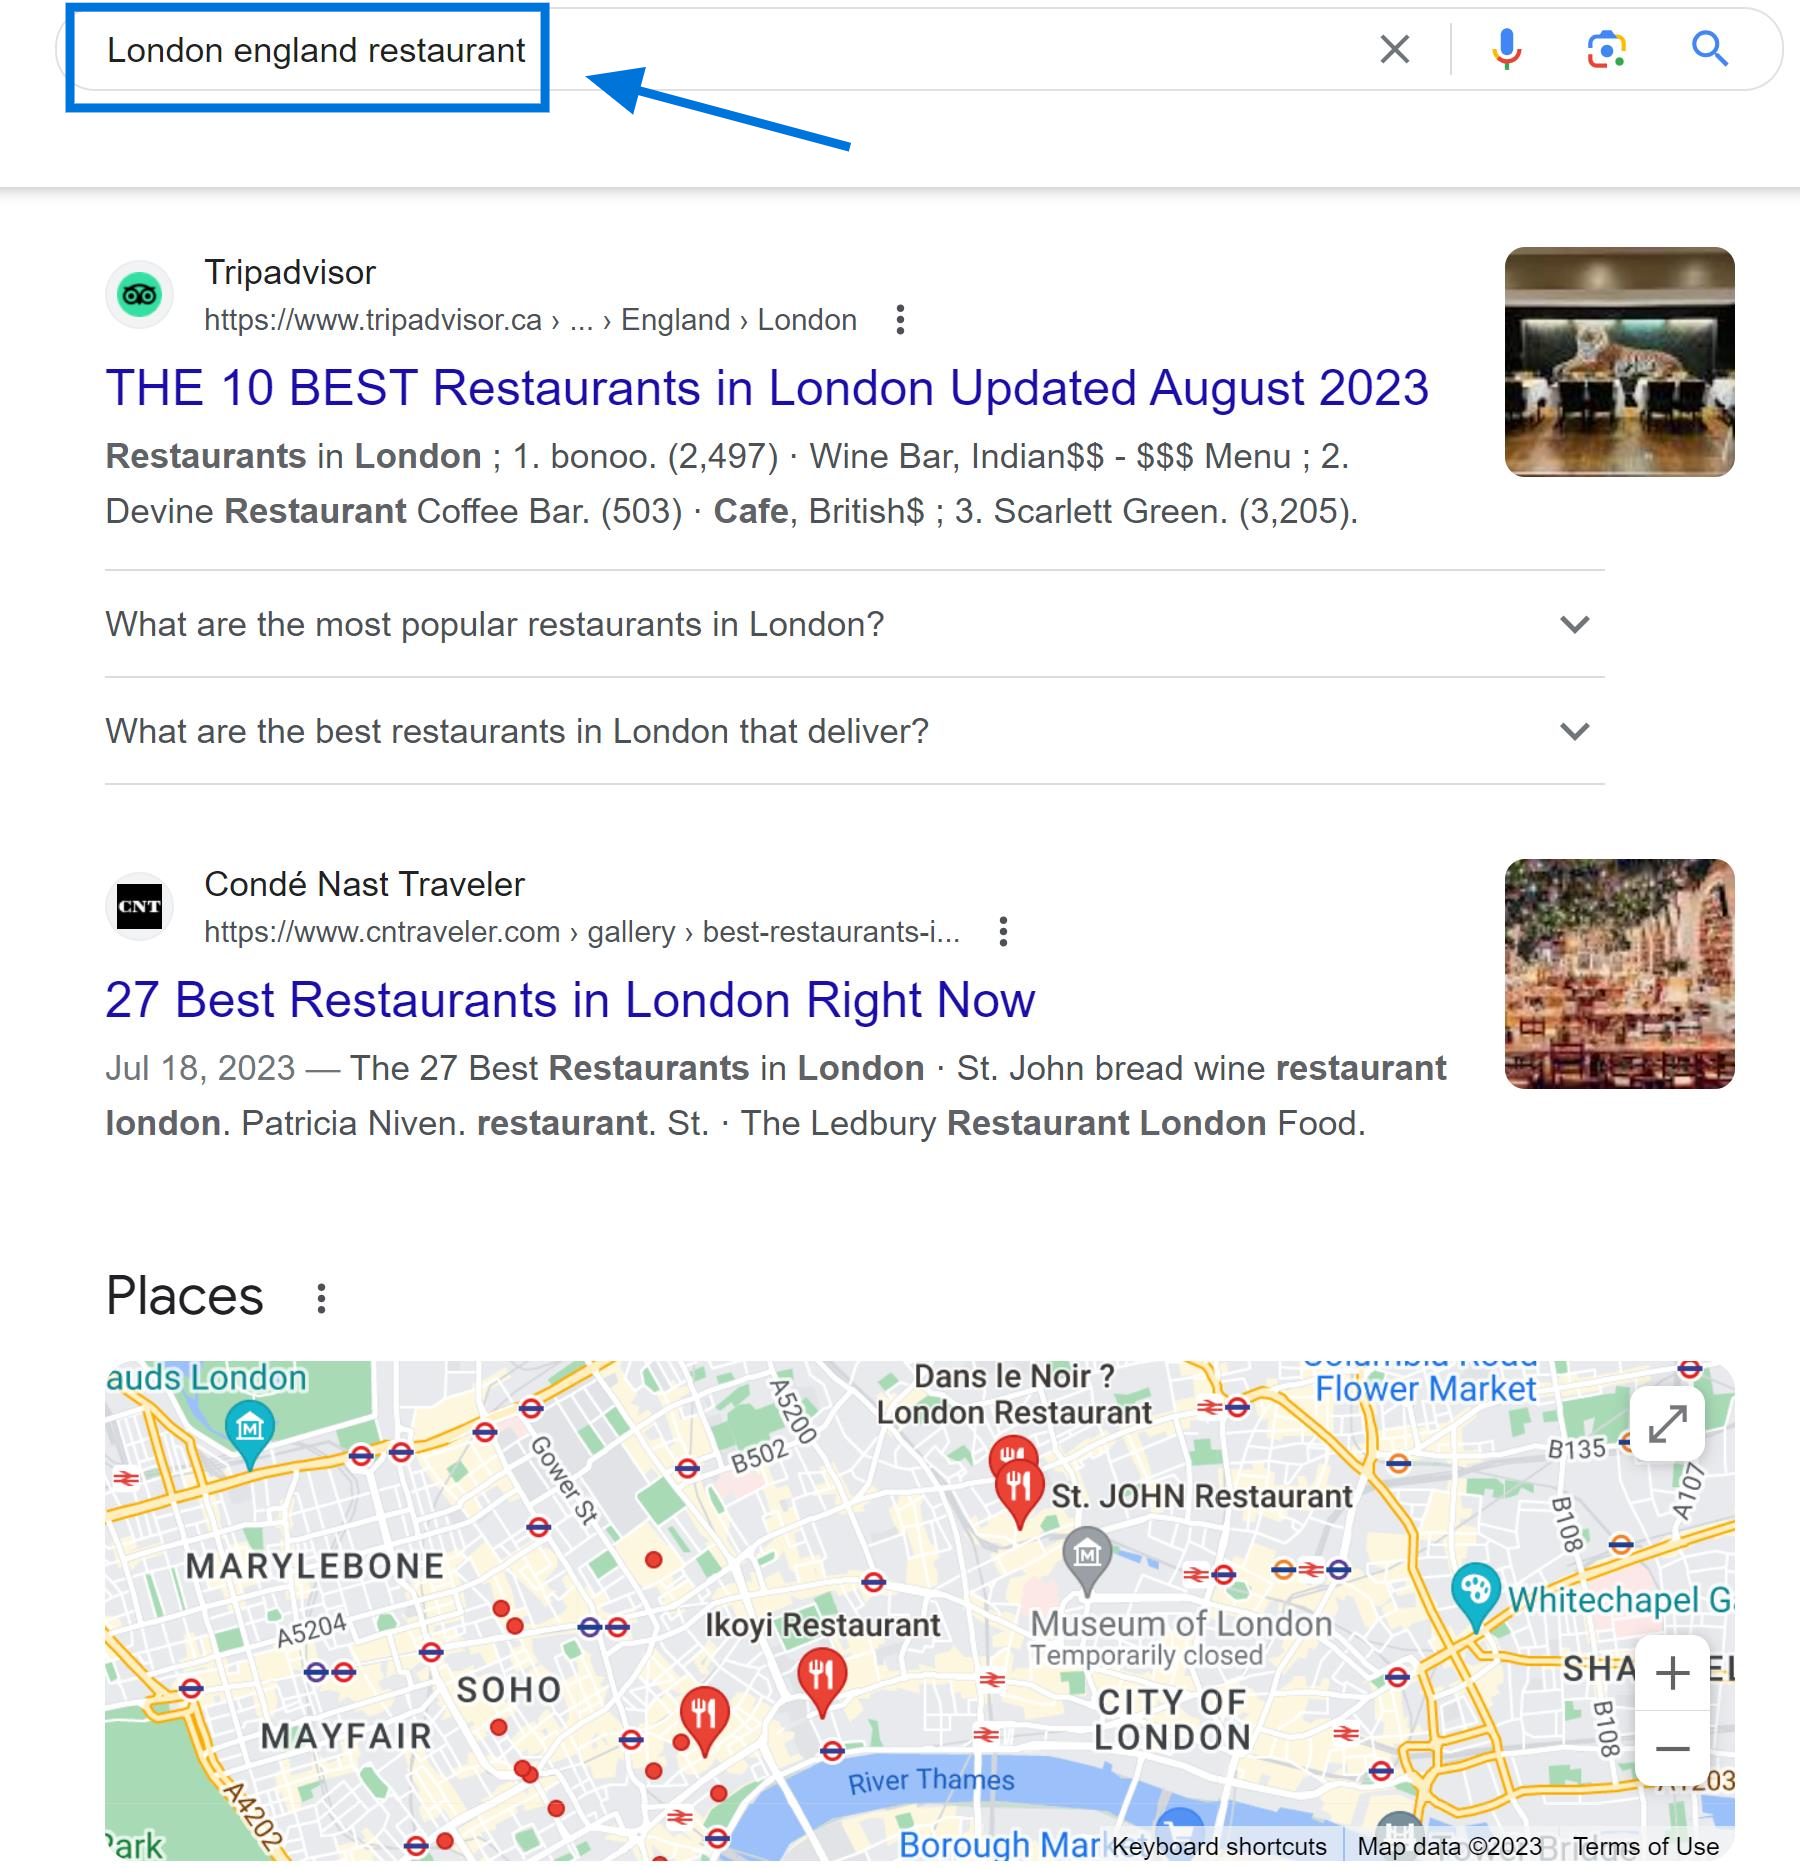 Geo-targeting Keywords Example "London England restaurant"